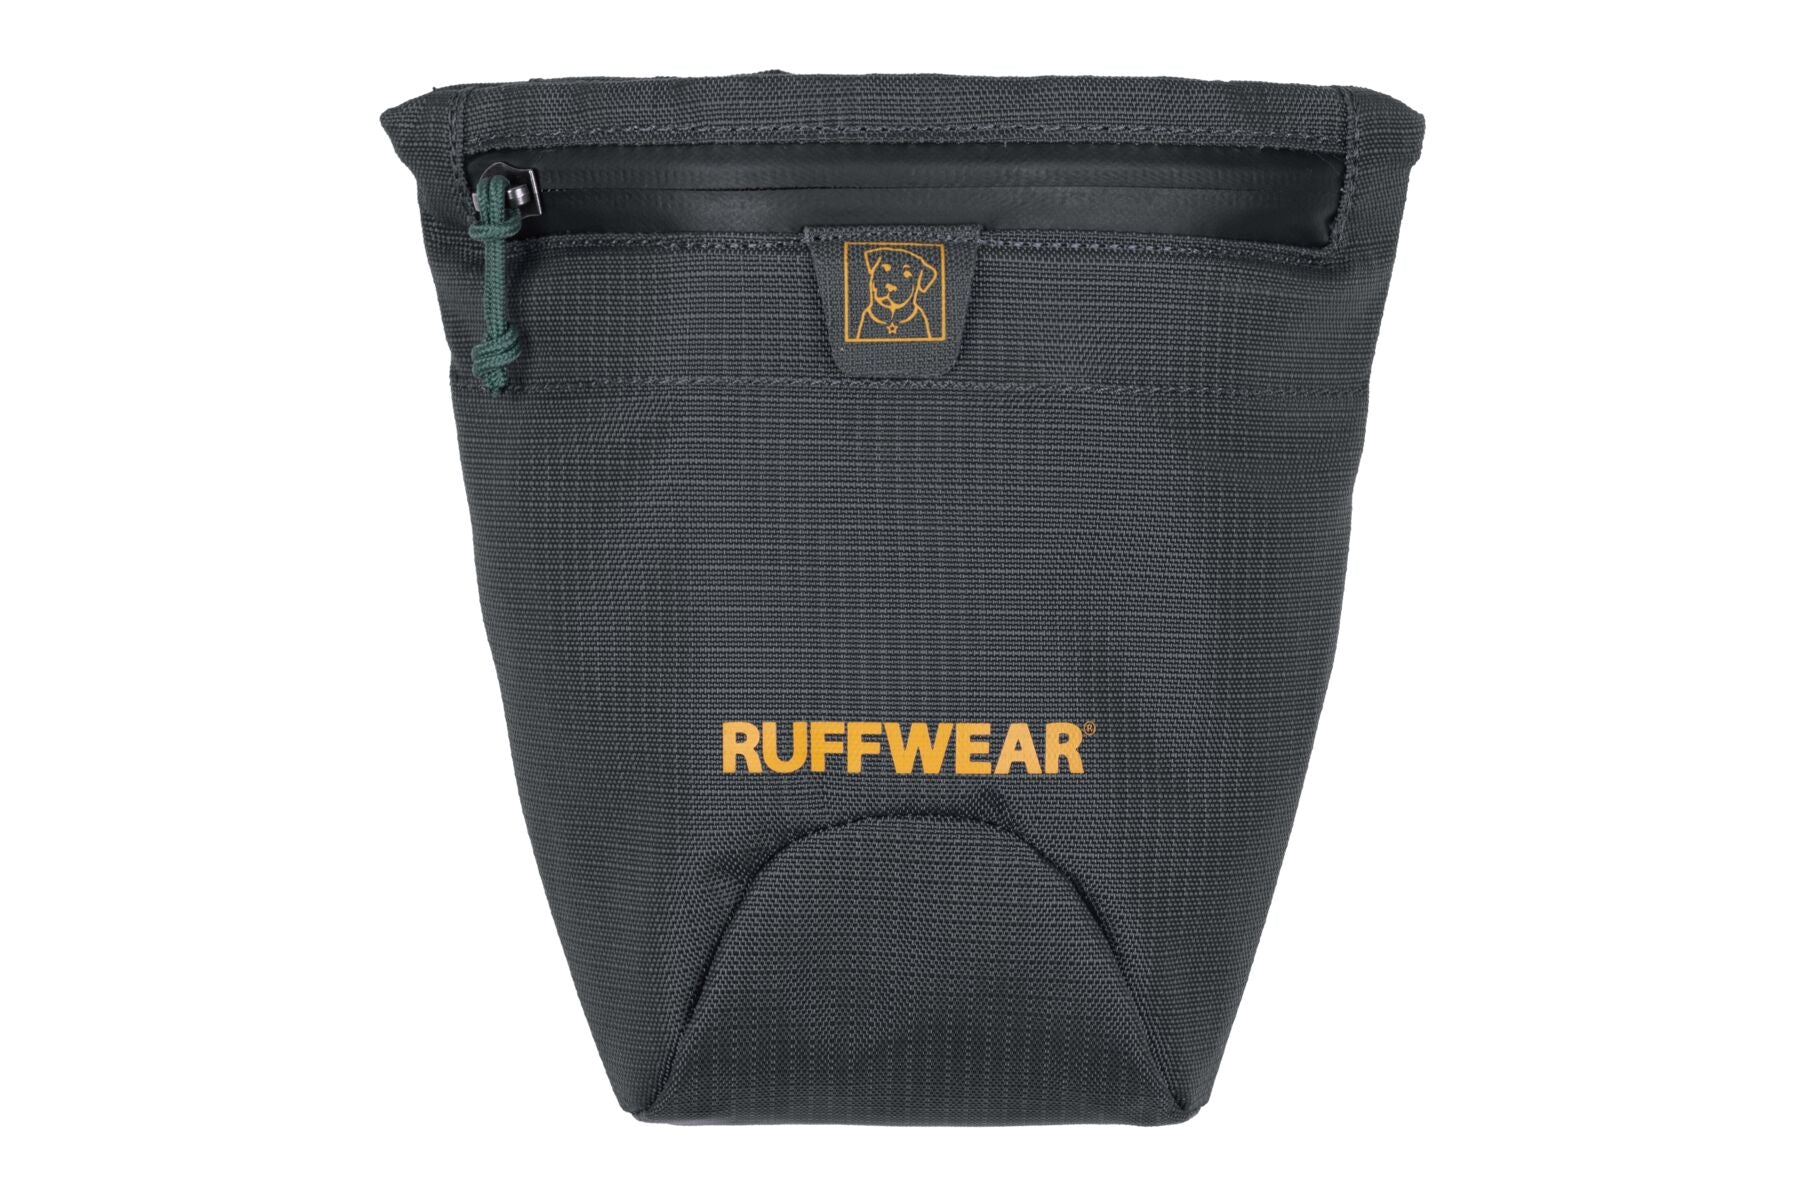 Ruffwear - Pack Out Bag